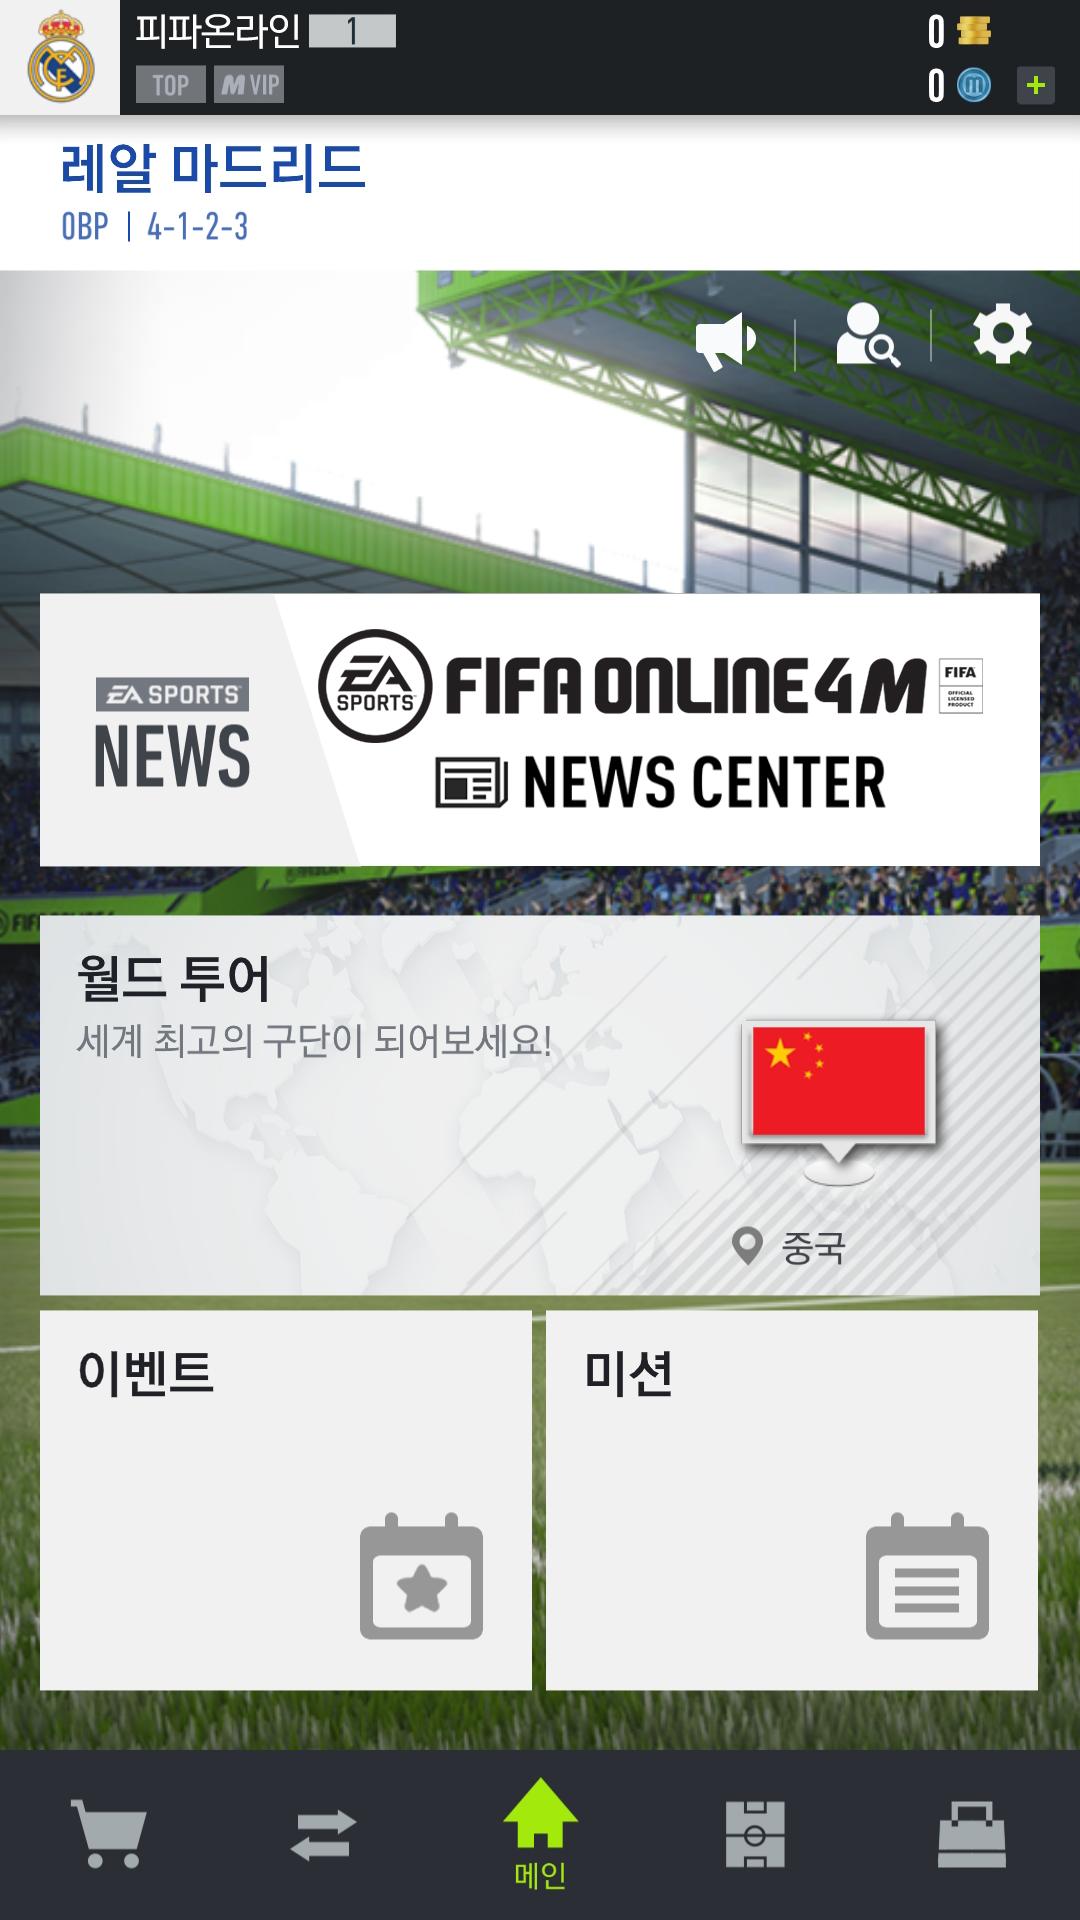 FIFA ONLINE 4 M by EA SPORTS™ 1.0.82 Screenshot 18